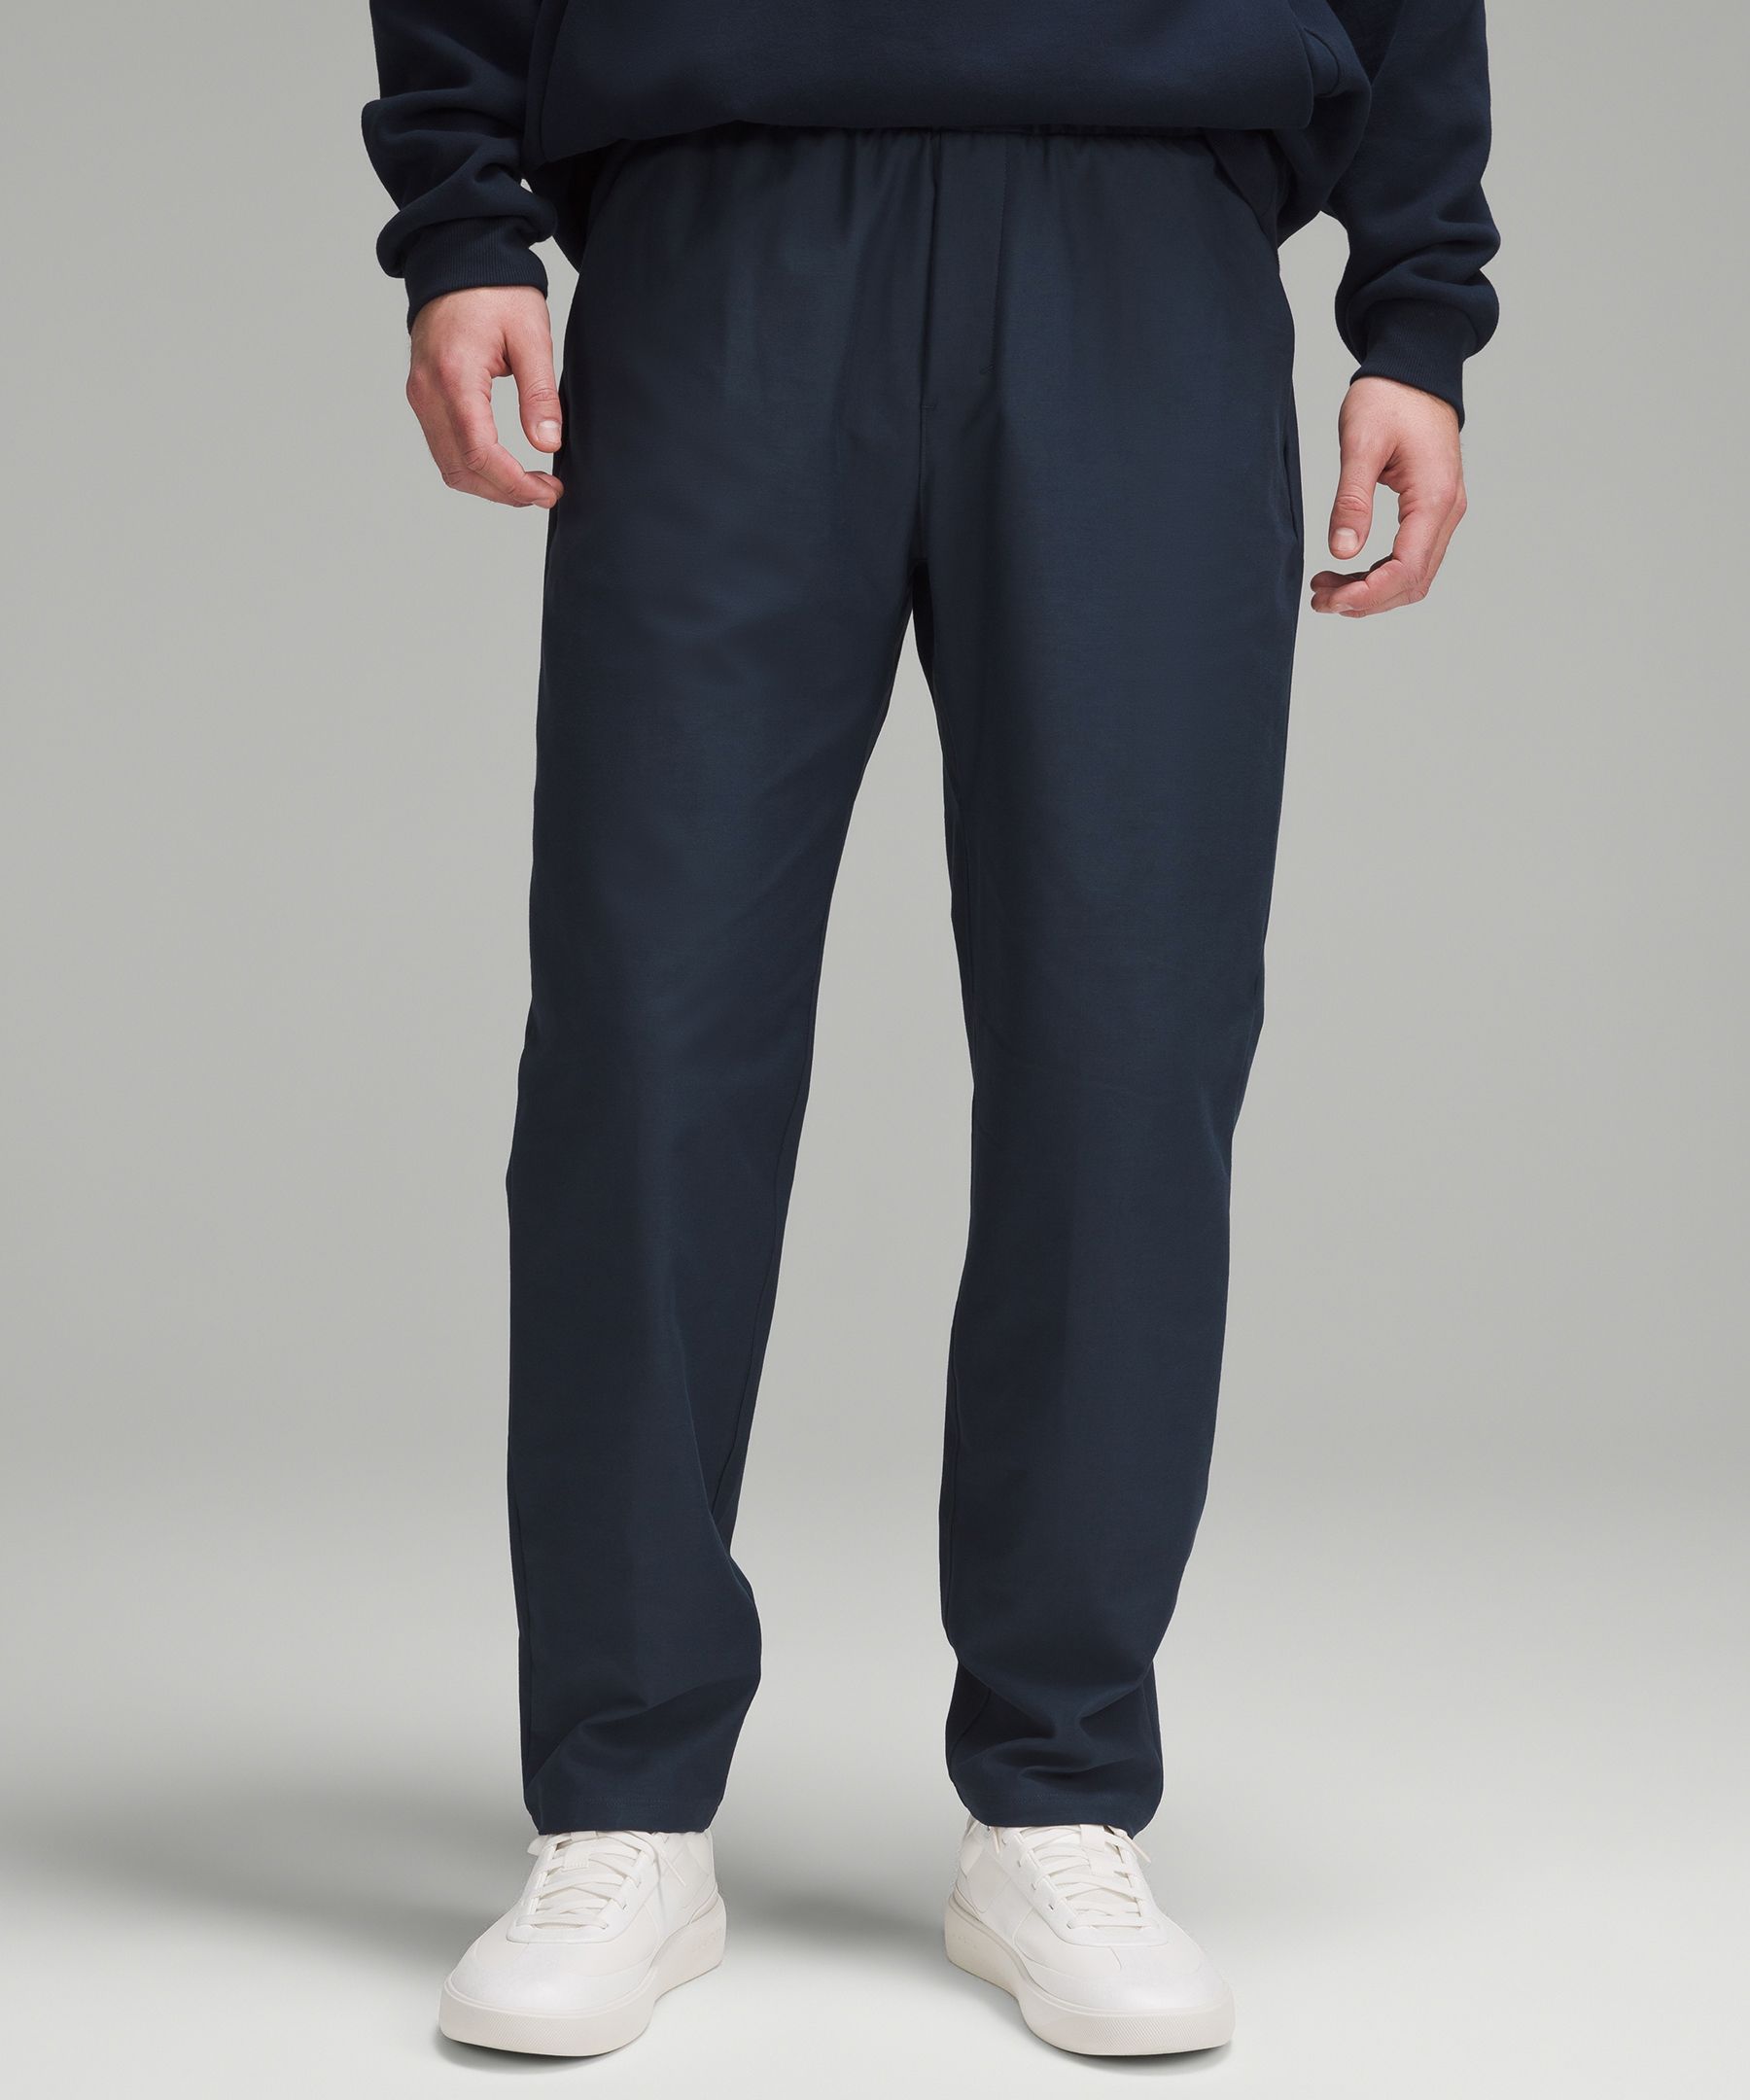 Lululemon Men's Soft Jersey Tapered Pant Black Size Large 28 Inch Inseam